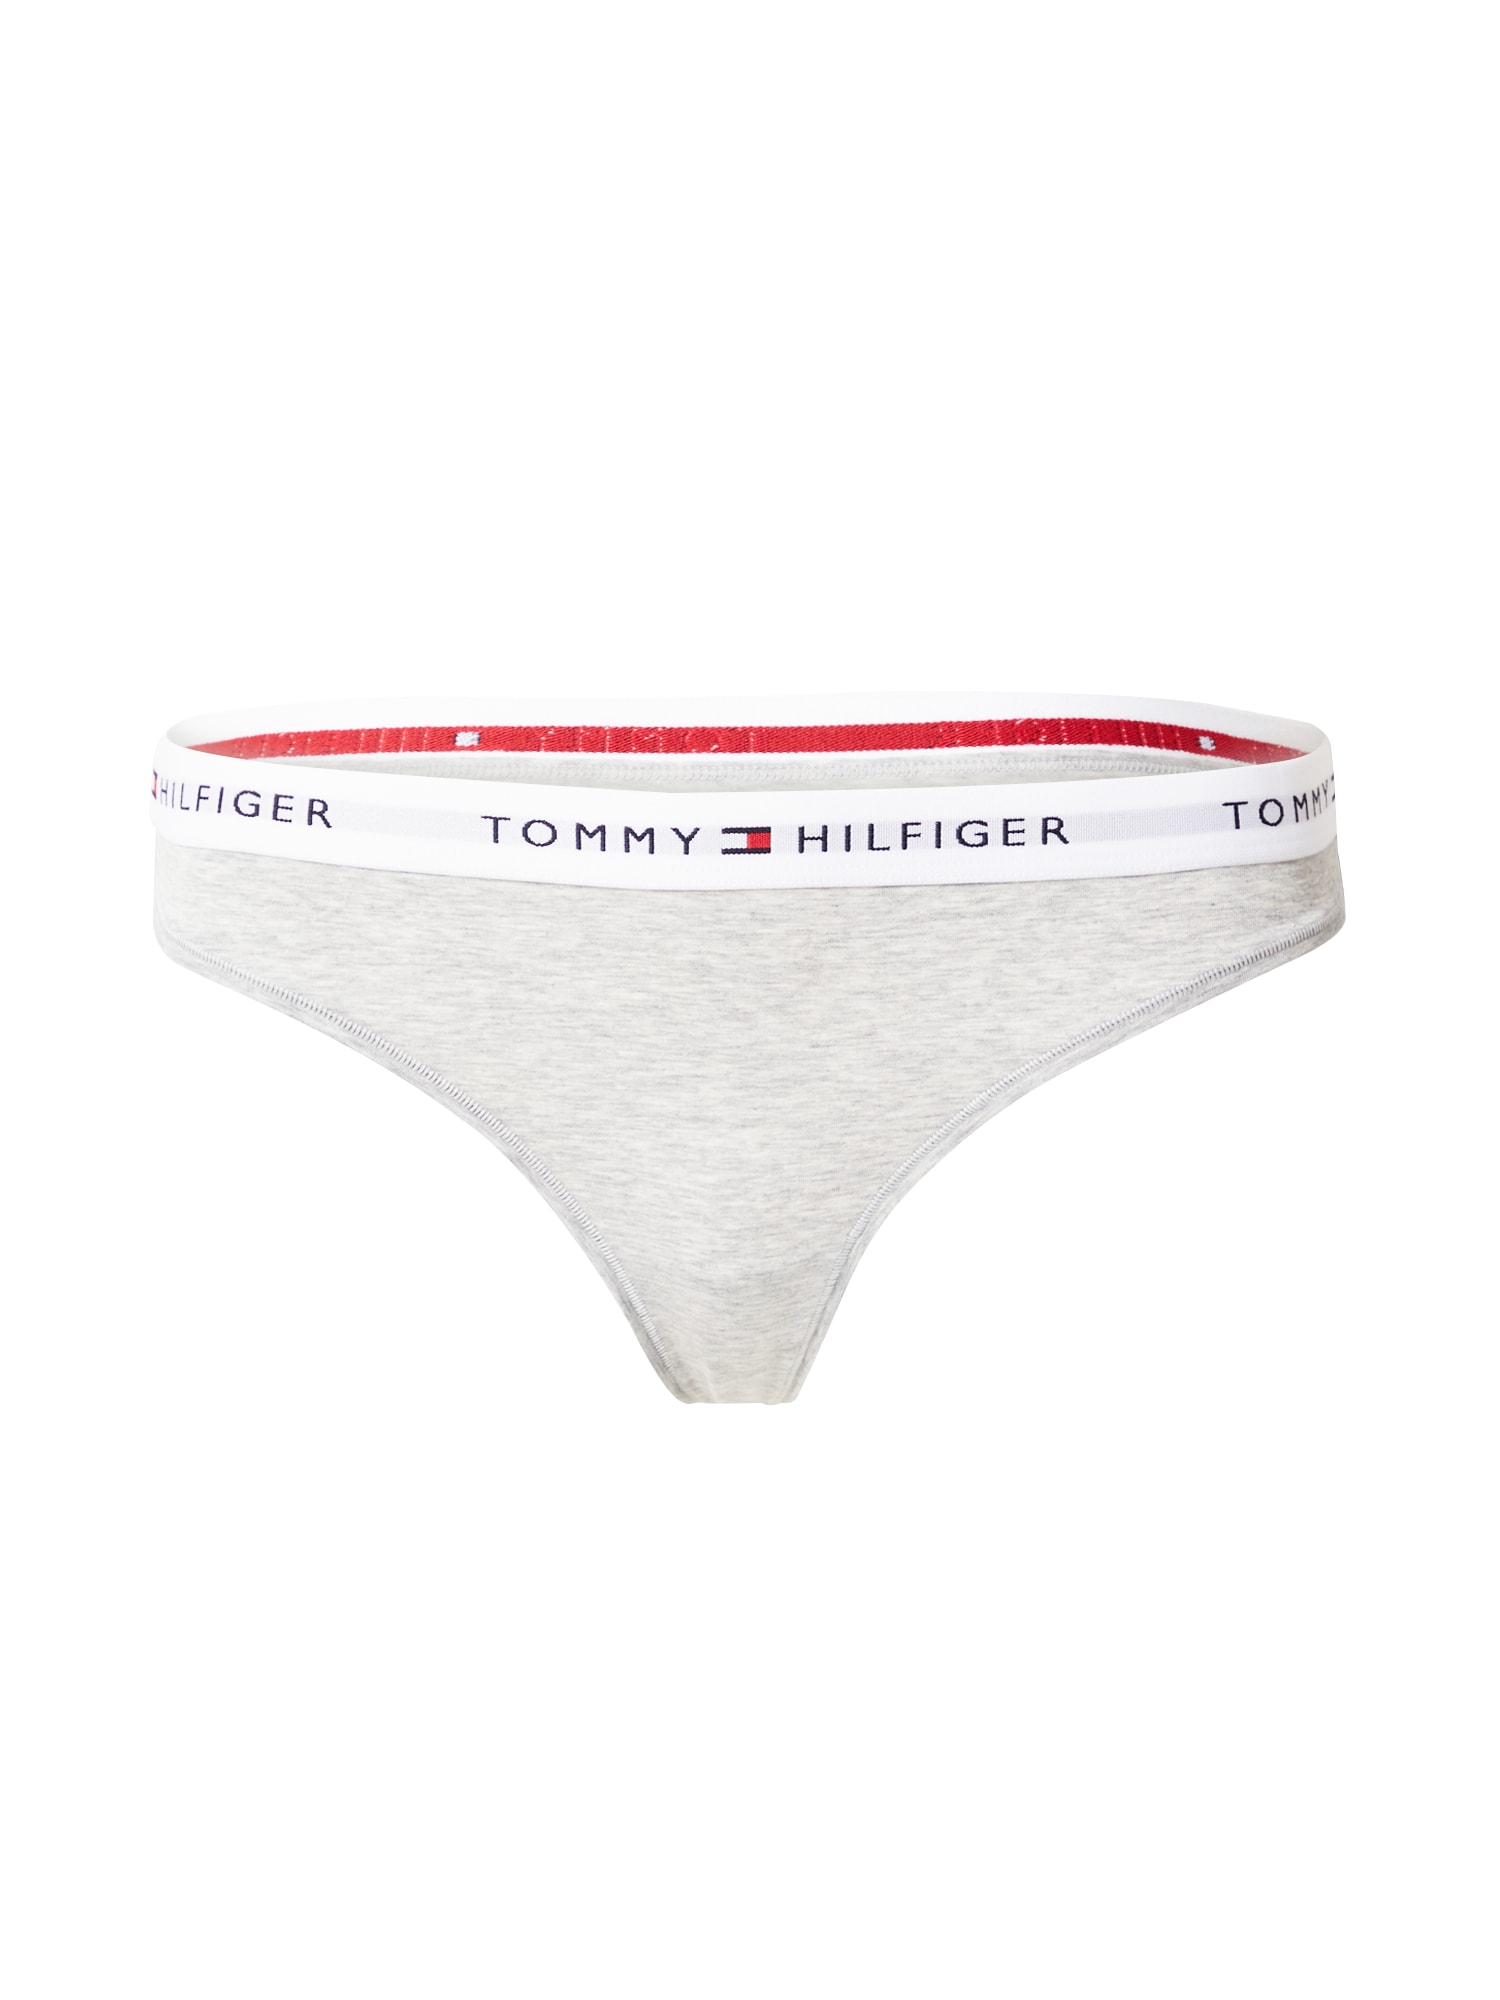 Tangá námornícka modrá sivá melírovaná červená biela Tommy Hilfiger Underwear